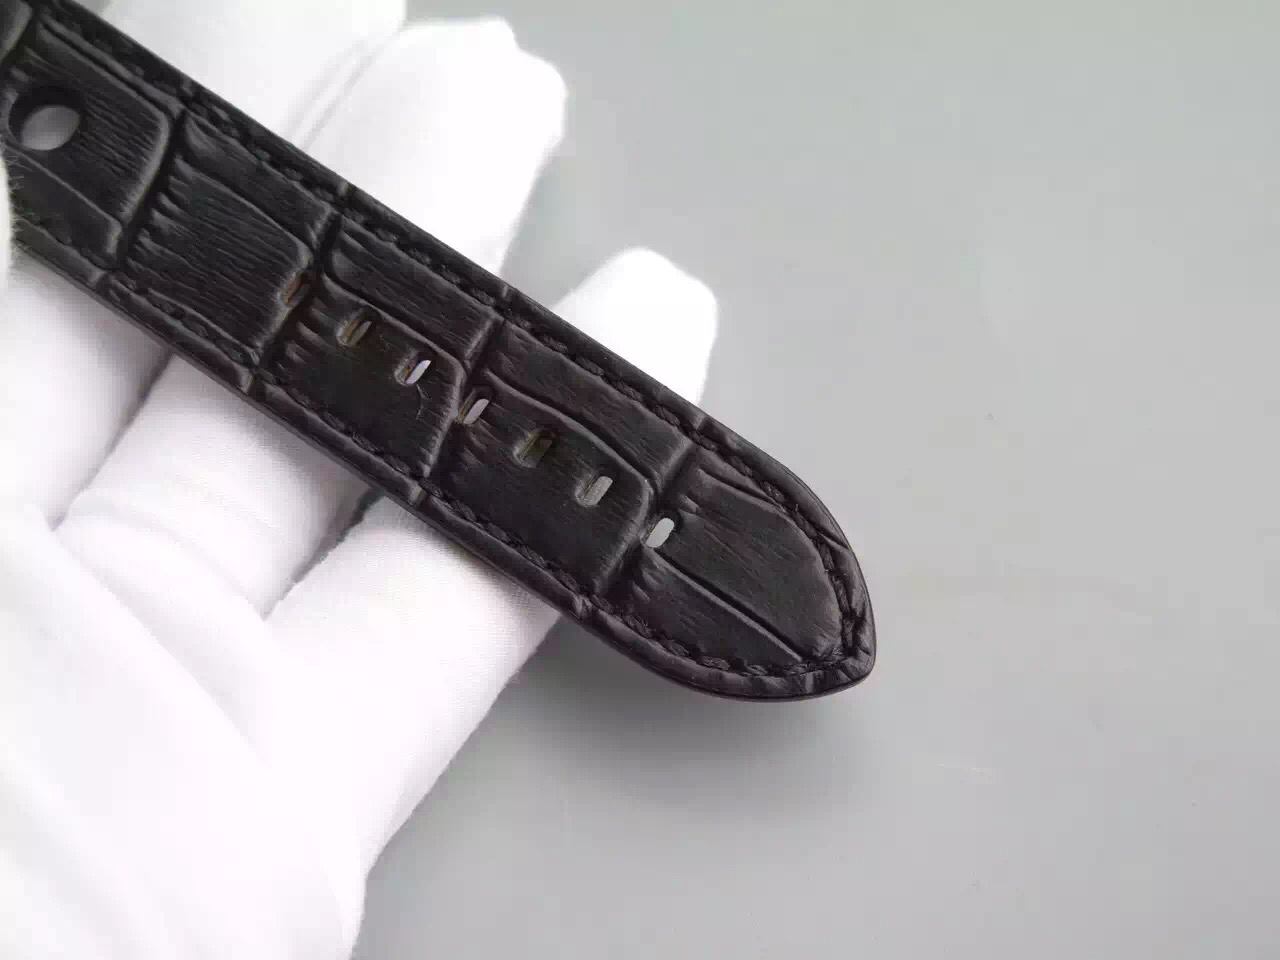 Replica U-Boat Black Leather Strap